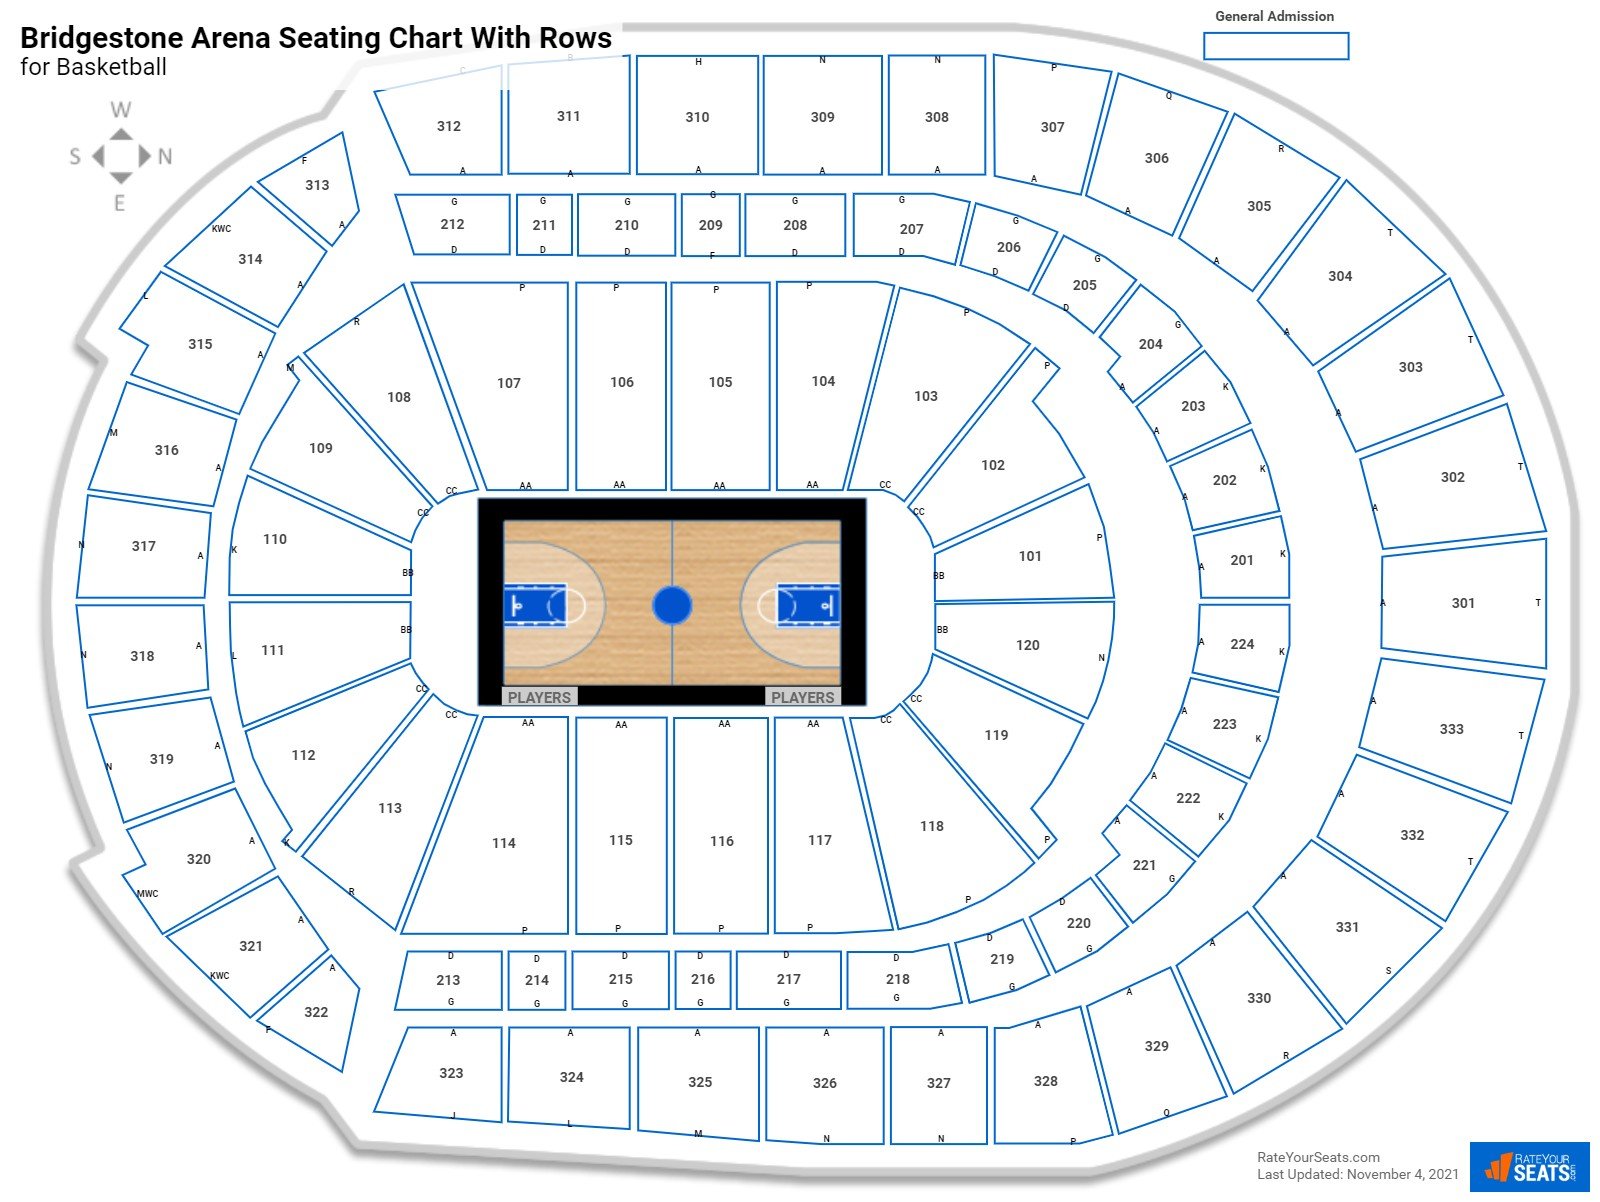 Bridgestone Arena Seating Charts For Basketball Rateyourseats Com